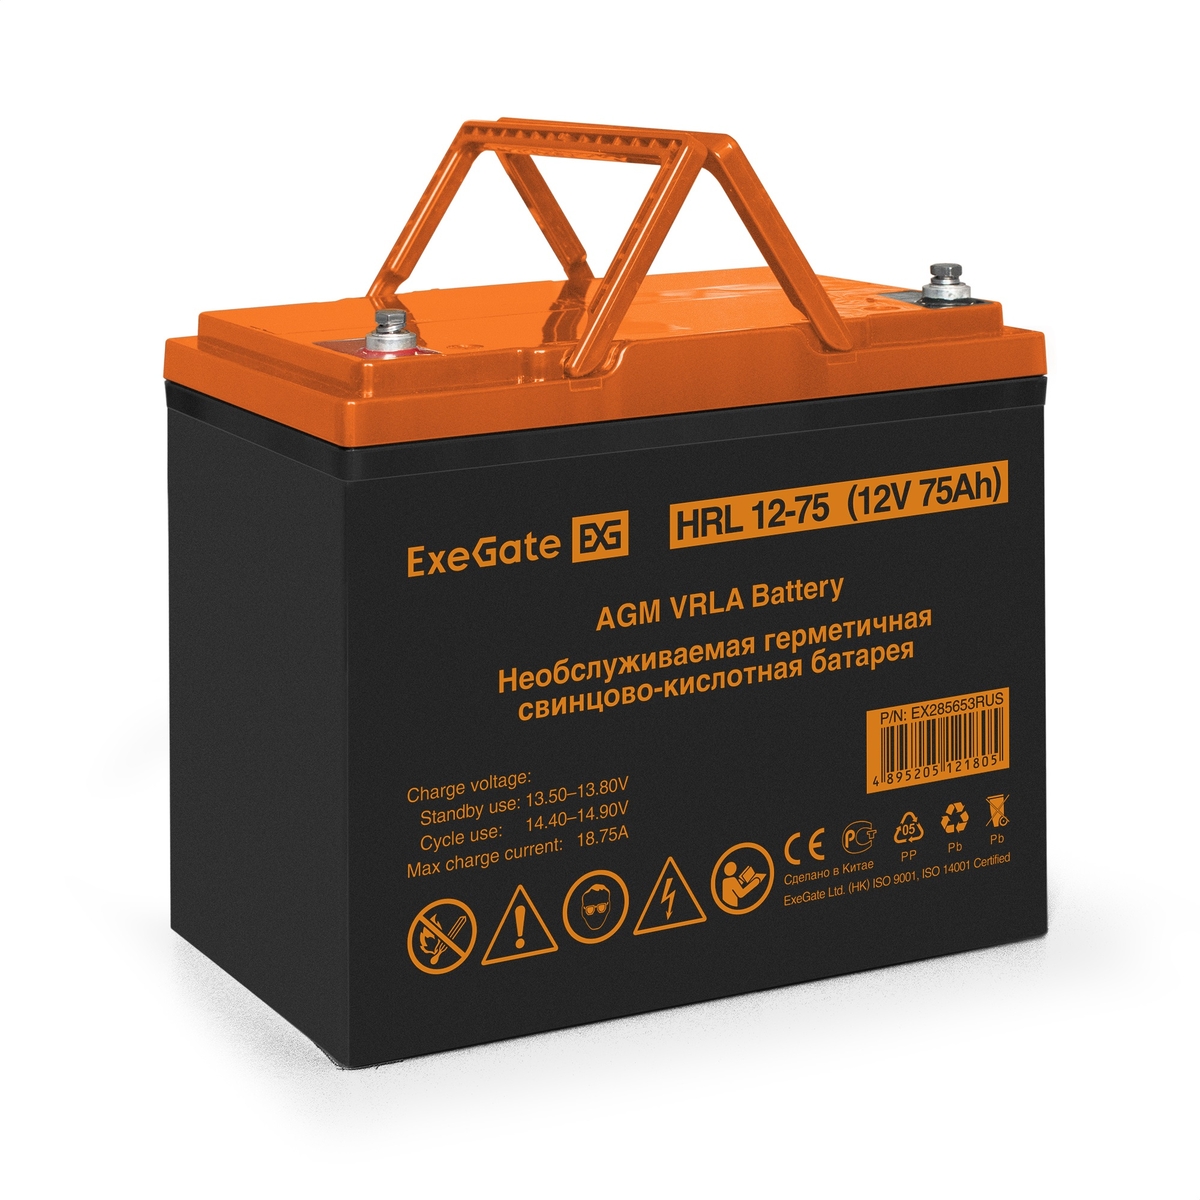 UPS set EX296002 + battery 75Ah EX285653 2 piece